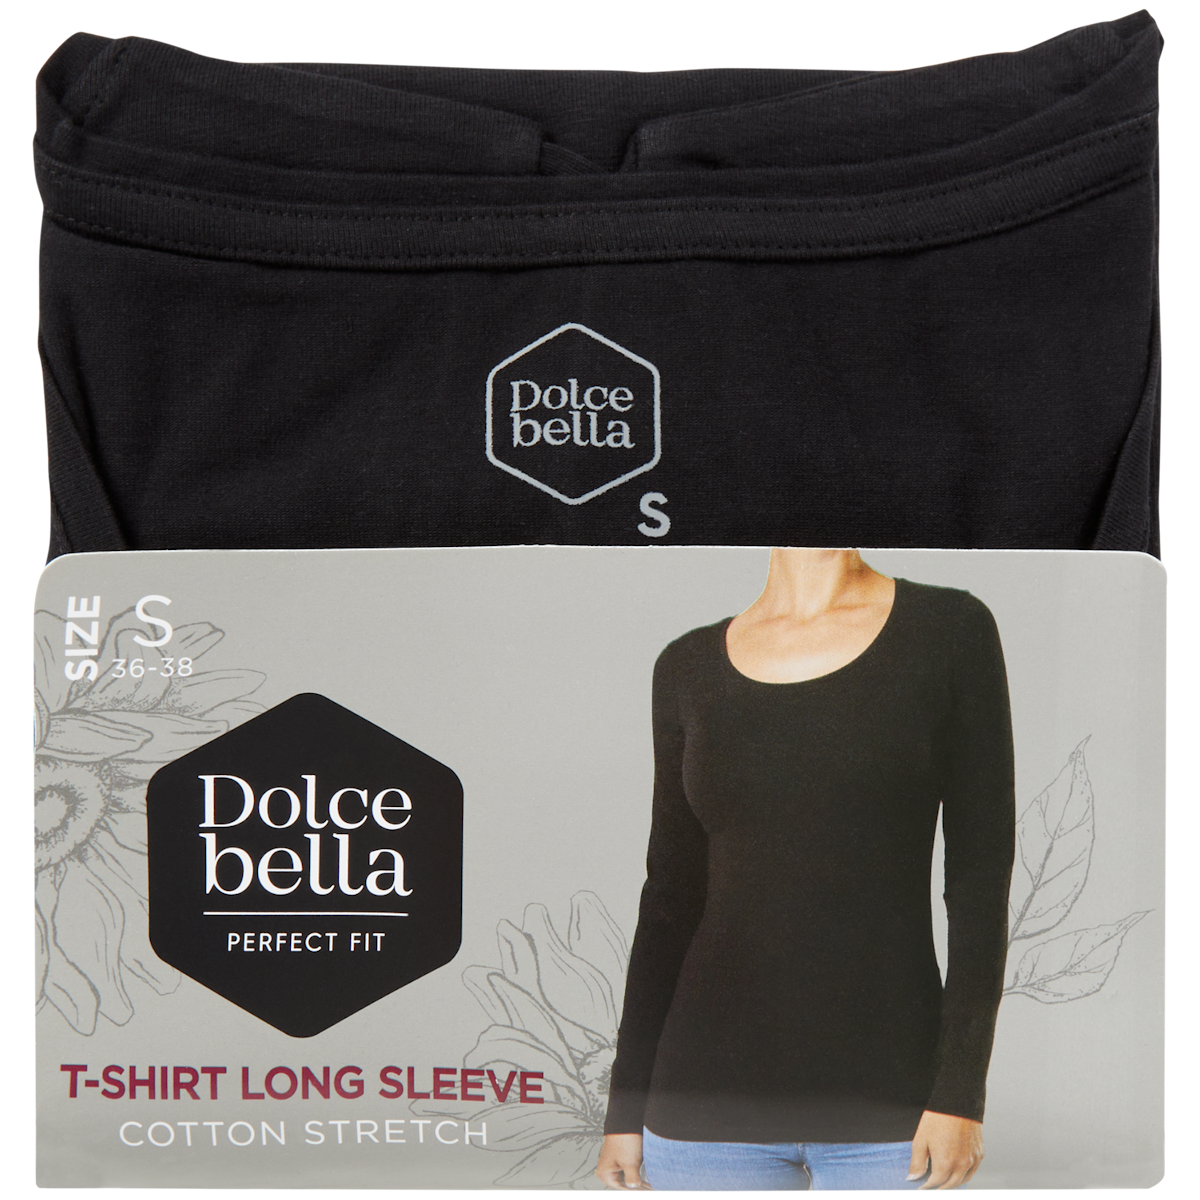 Dolce Bella basic T-shirt